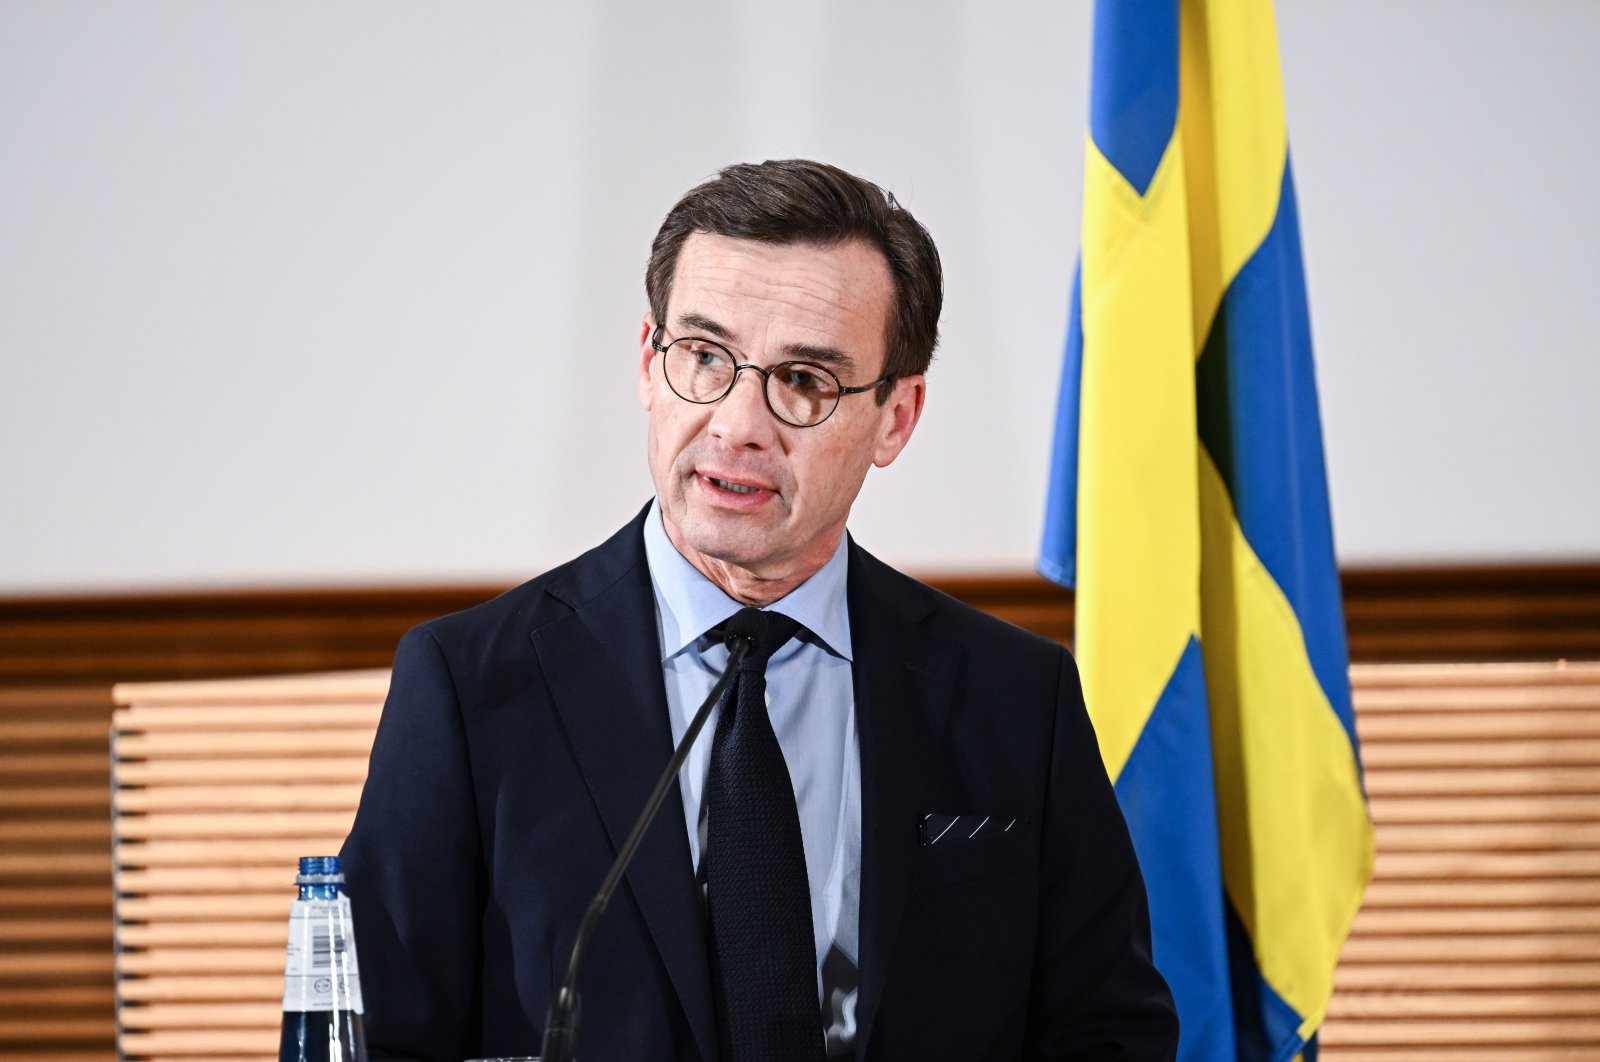 Sweden&#039;s Prime Minister Ulf Kristersson speaks at the Riksdag, the Swedish parliament, in Stockholm, Sweden, Nov. 24, 2022. (IHA Photo)